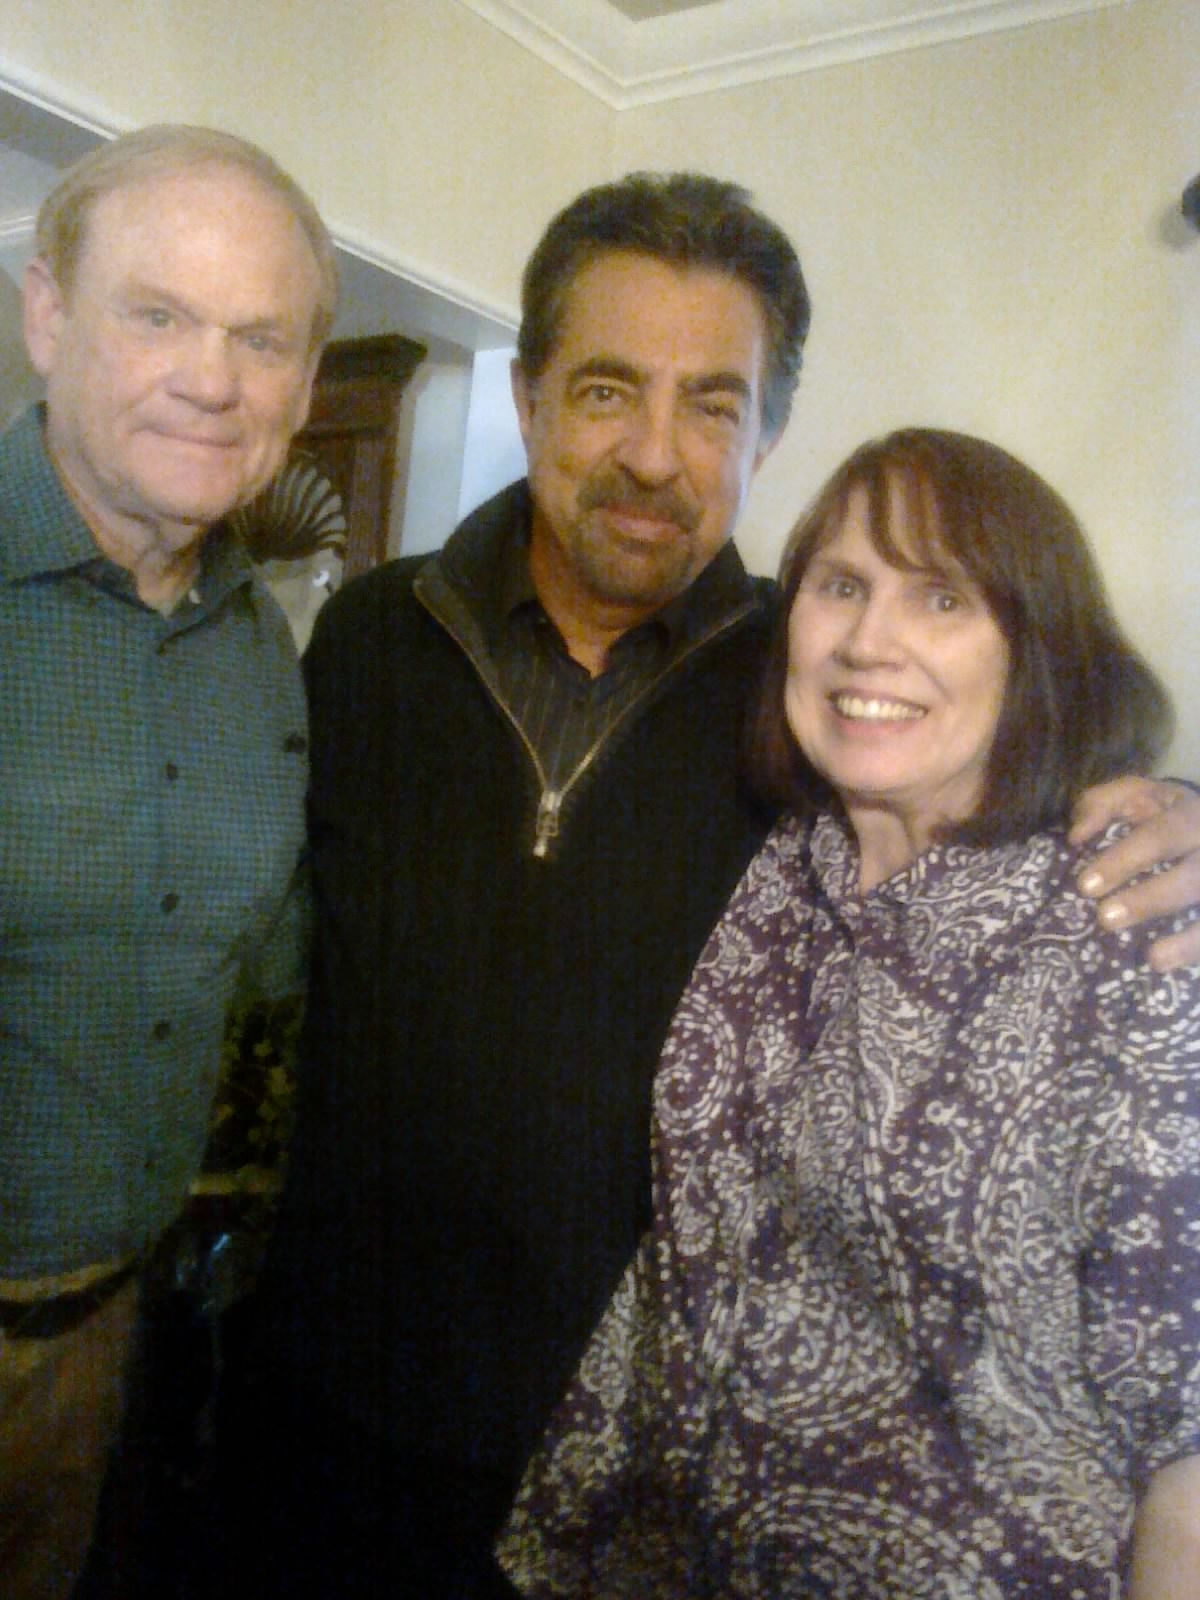 Dan Owens, Joe Mantegna, and Linda Sandee Larson